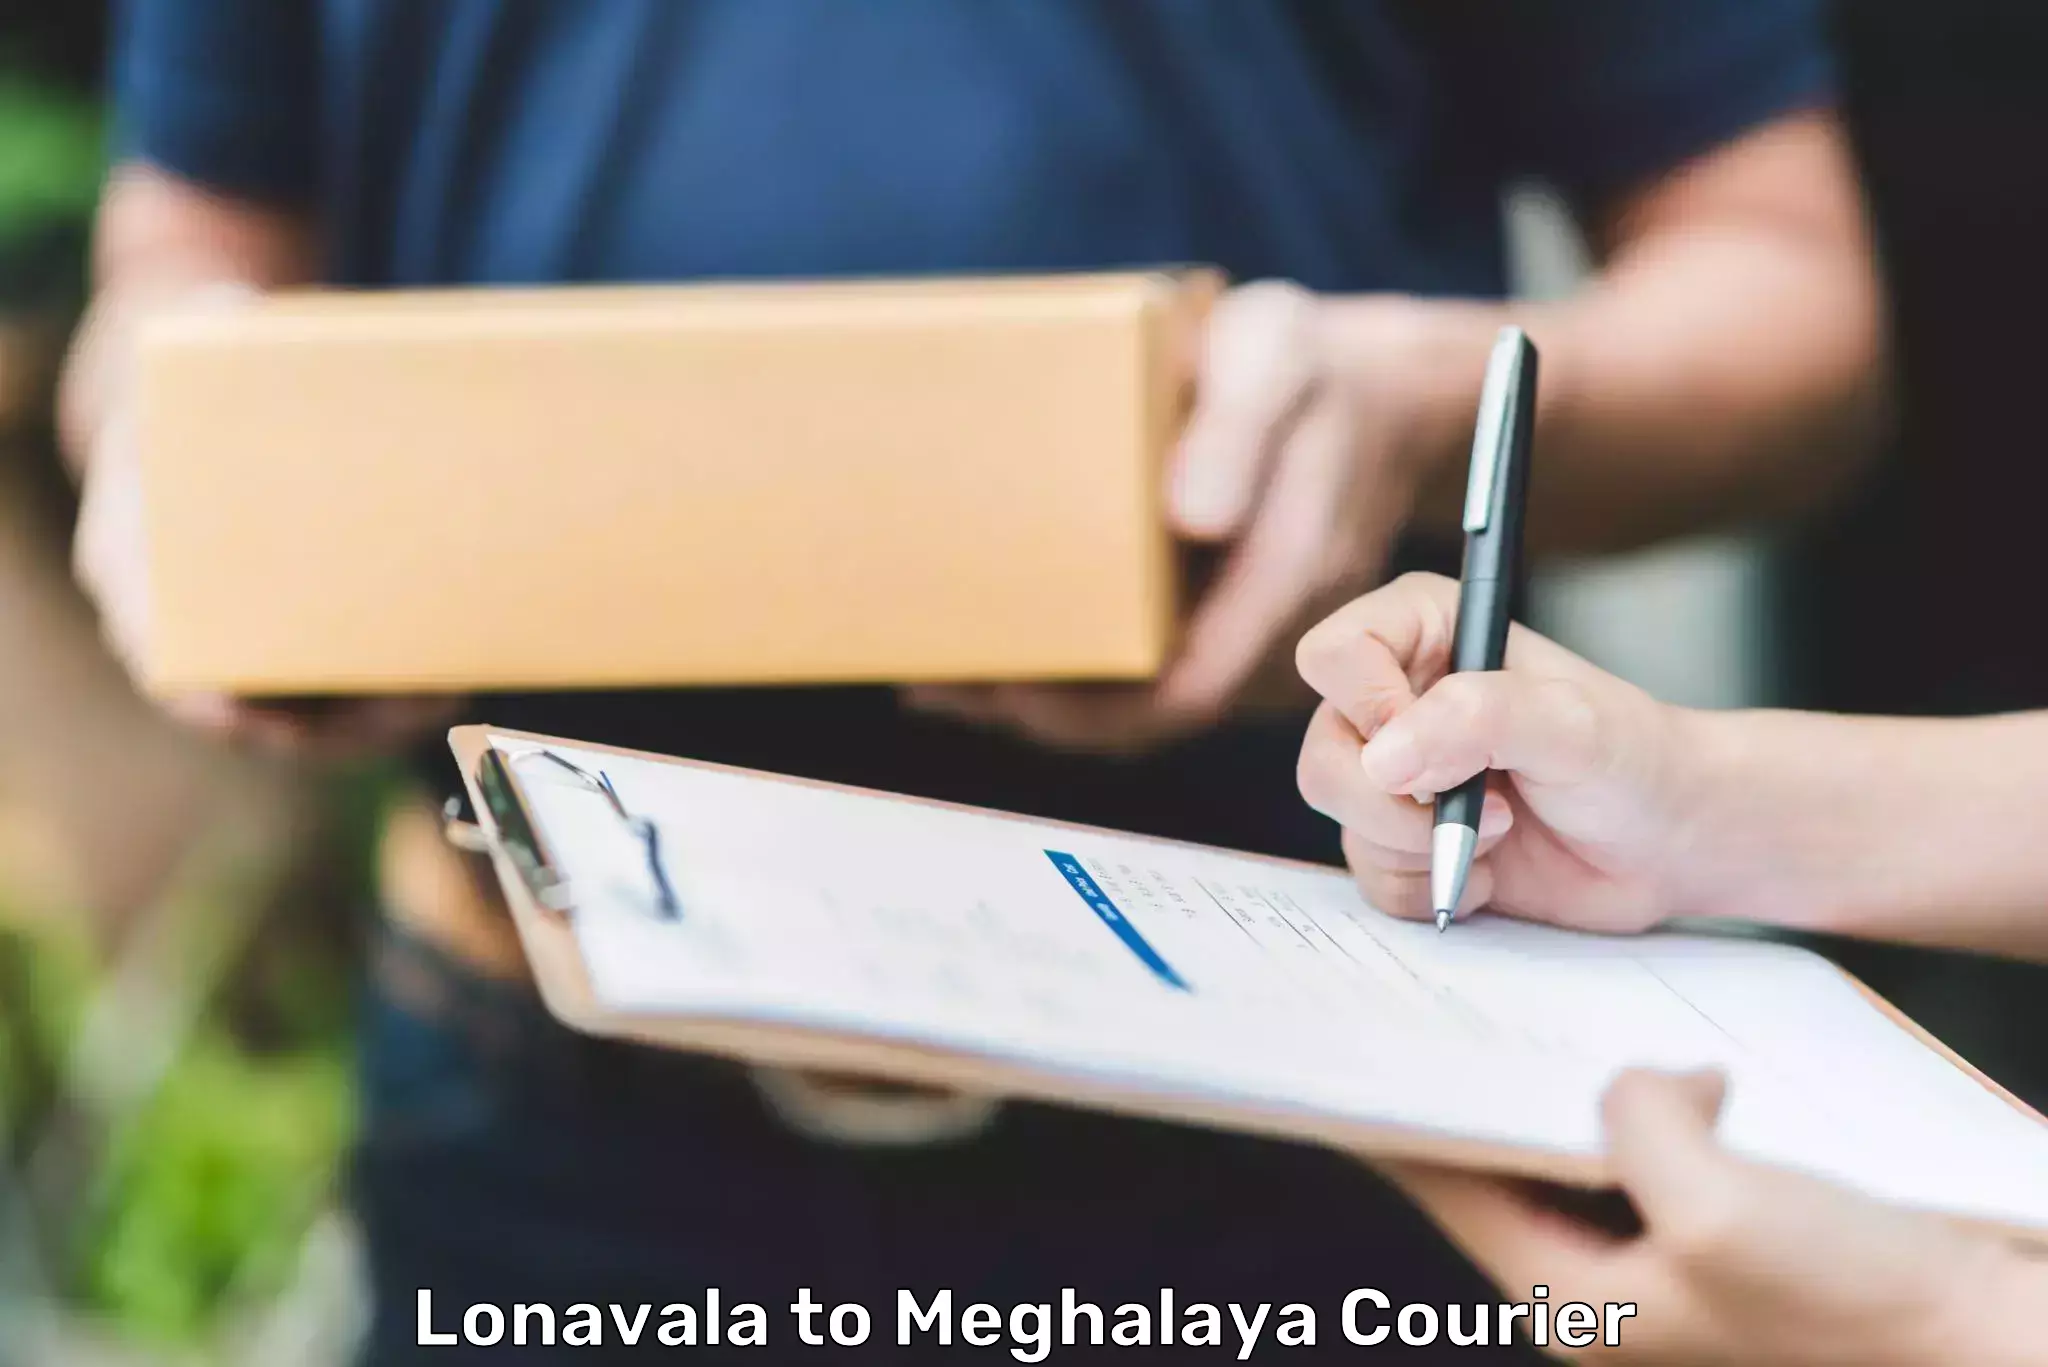 Logistics service provider Lonavala to Meghalaya